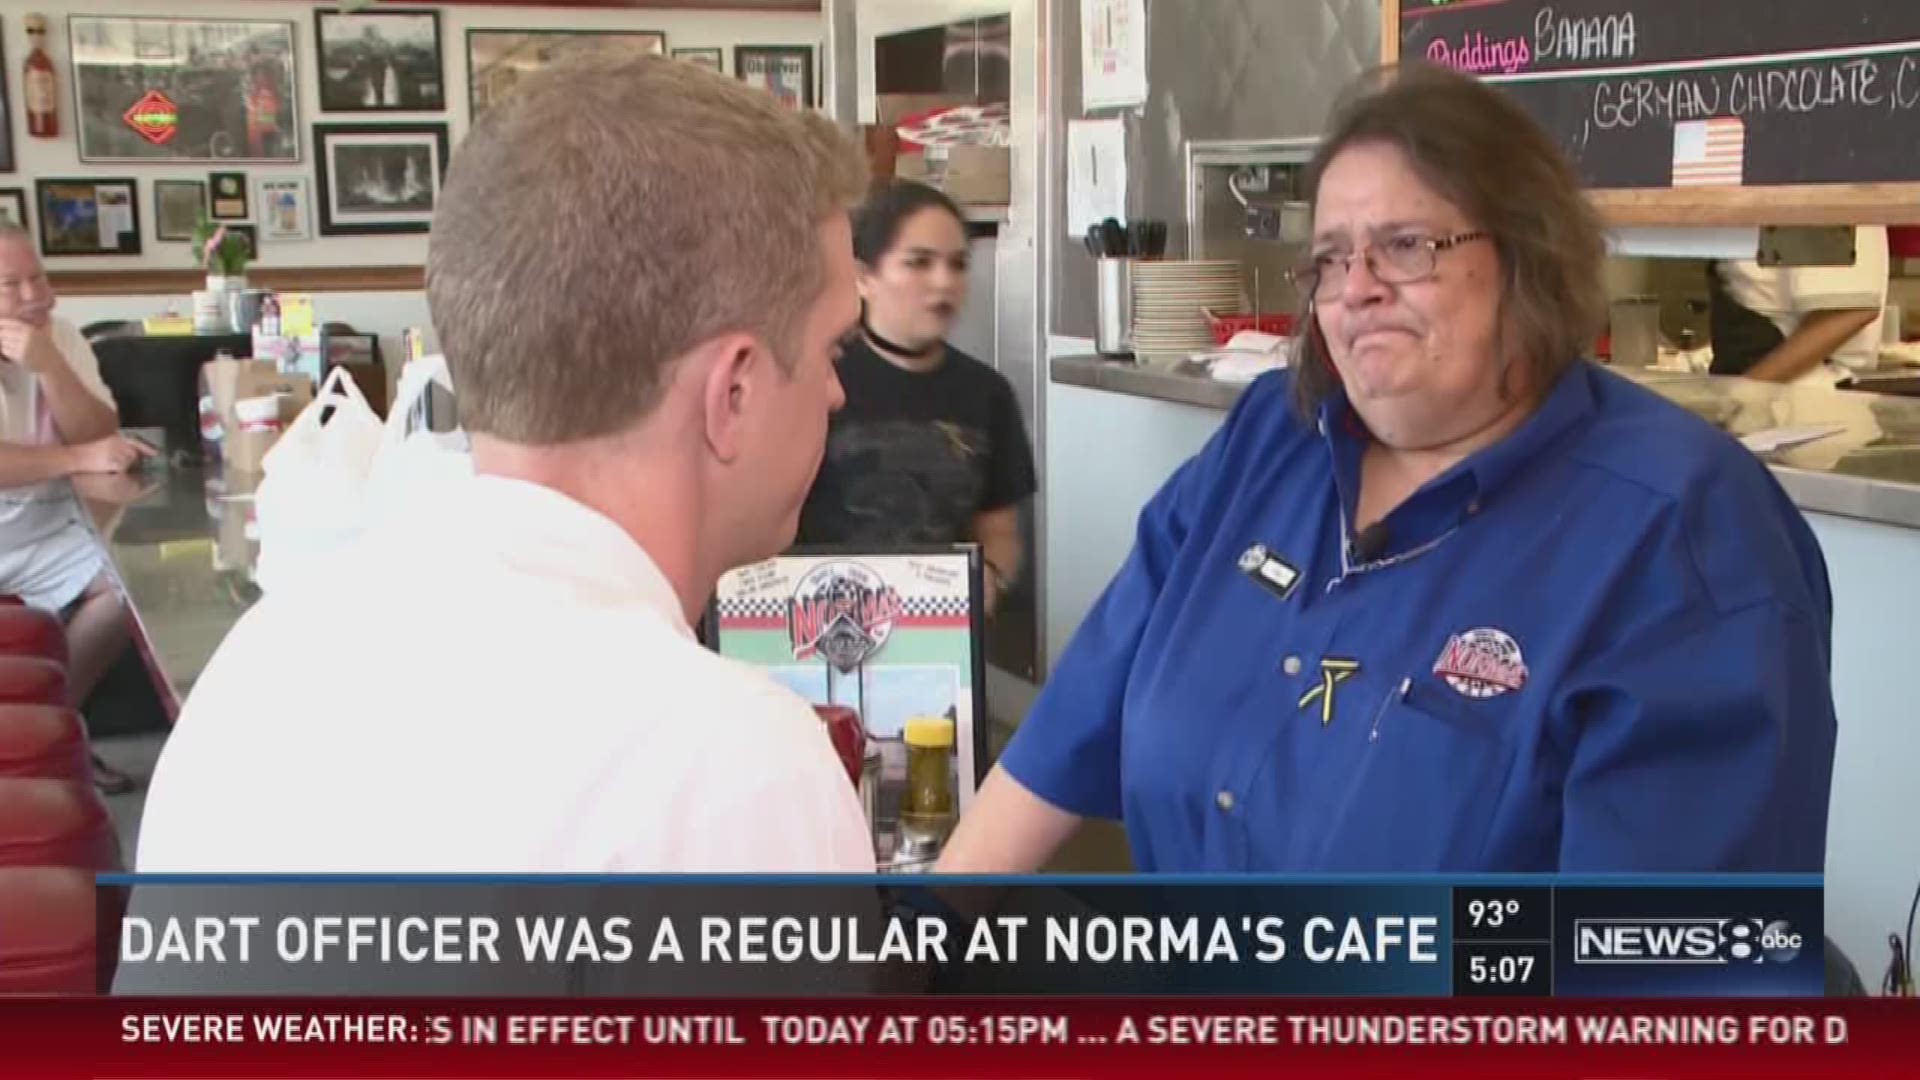 DART officer regular at Norma's Cafe